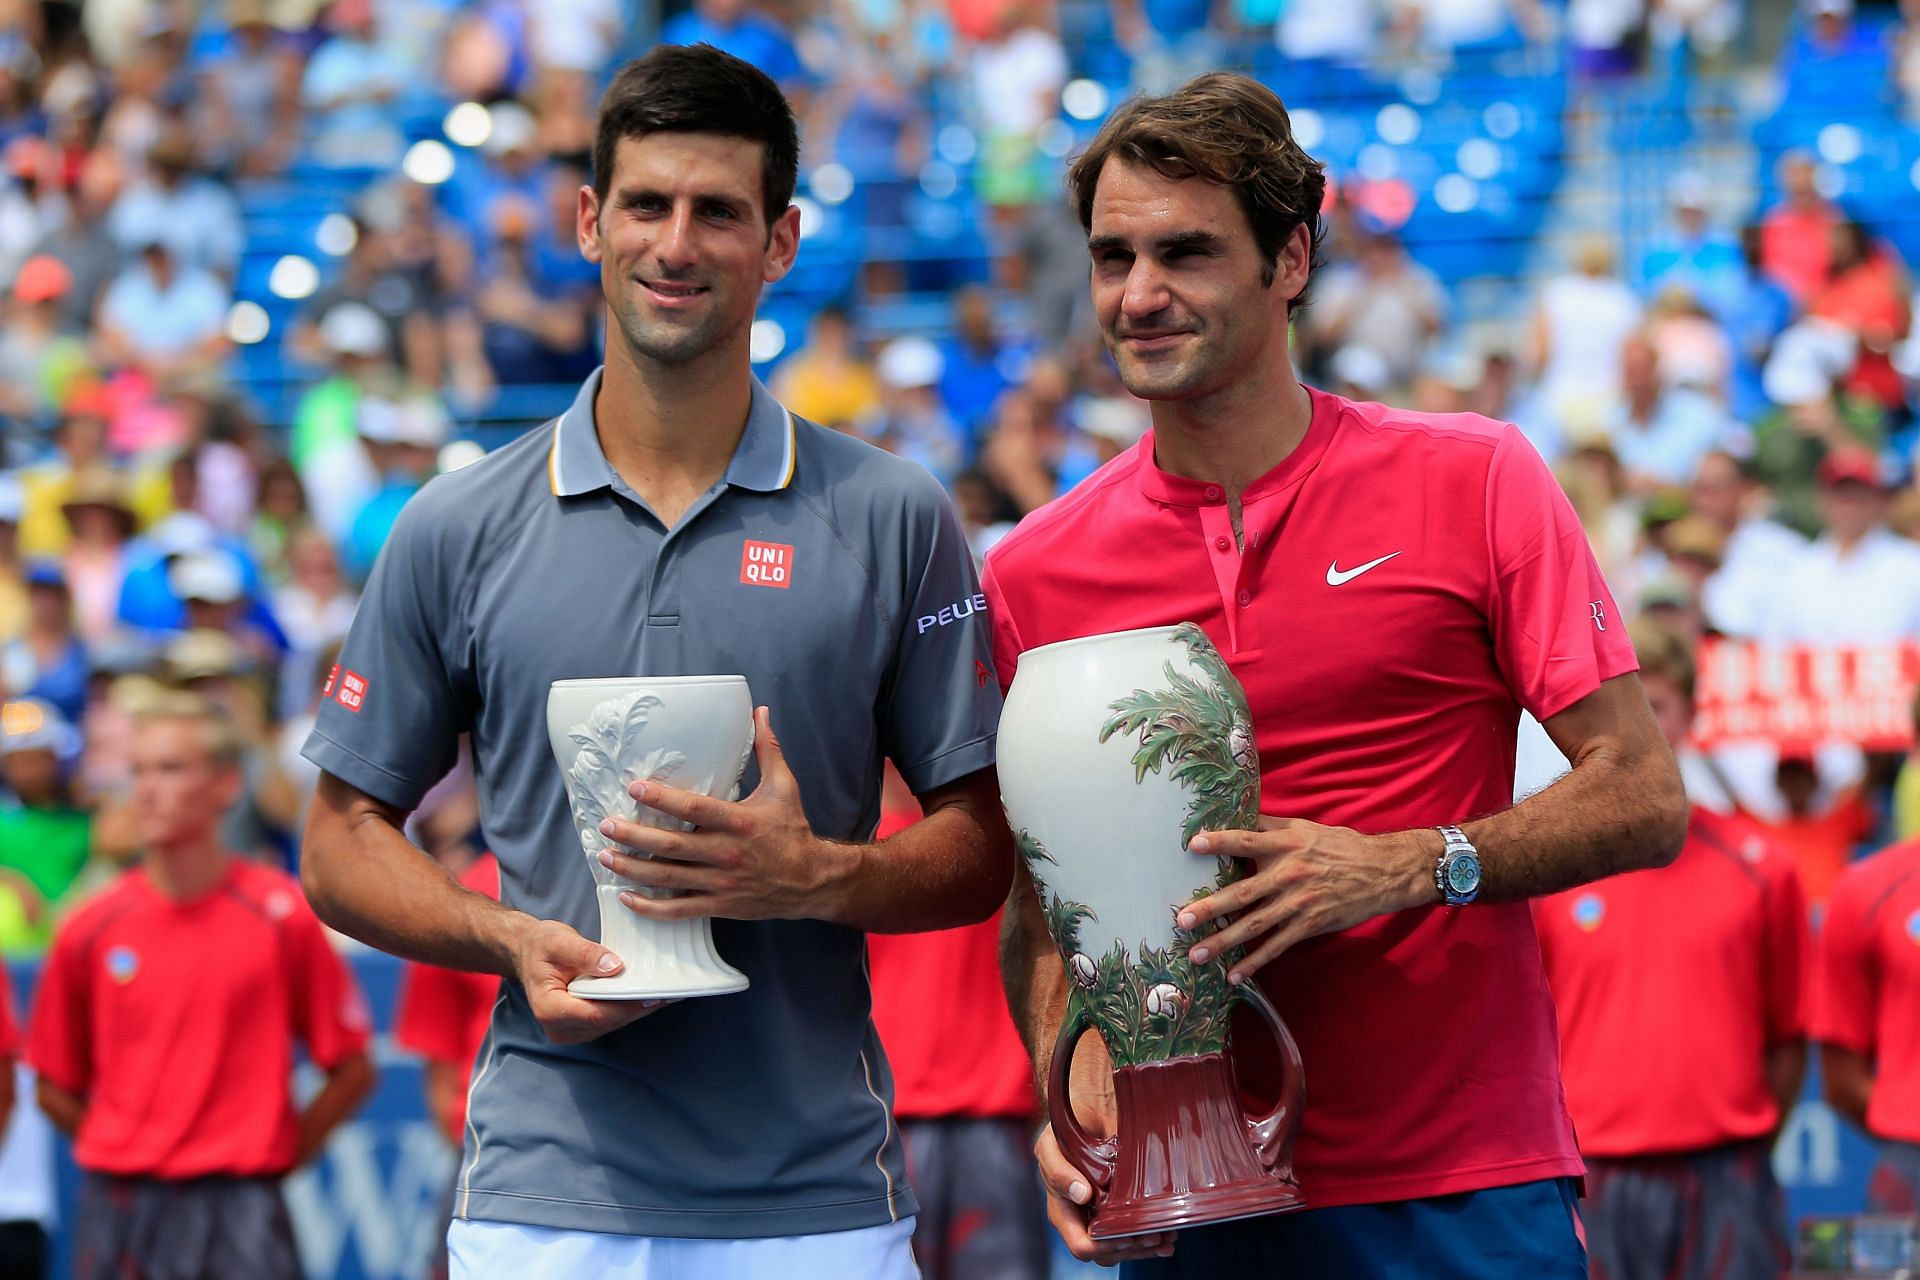 Roger Federer is much closer to Novak Djokovic on hardcourt than Rafael Nadal